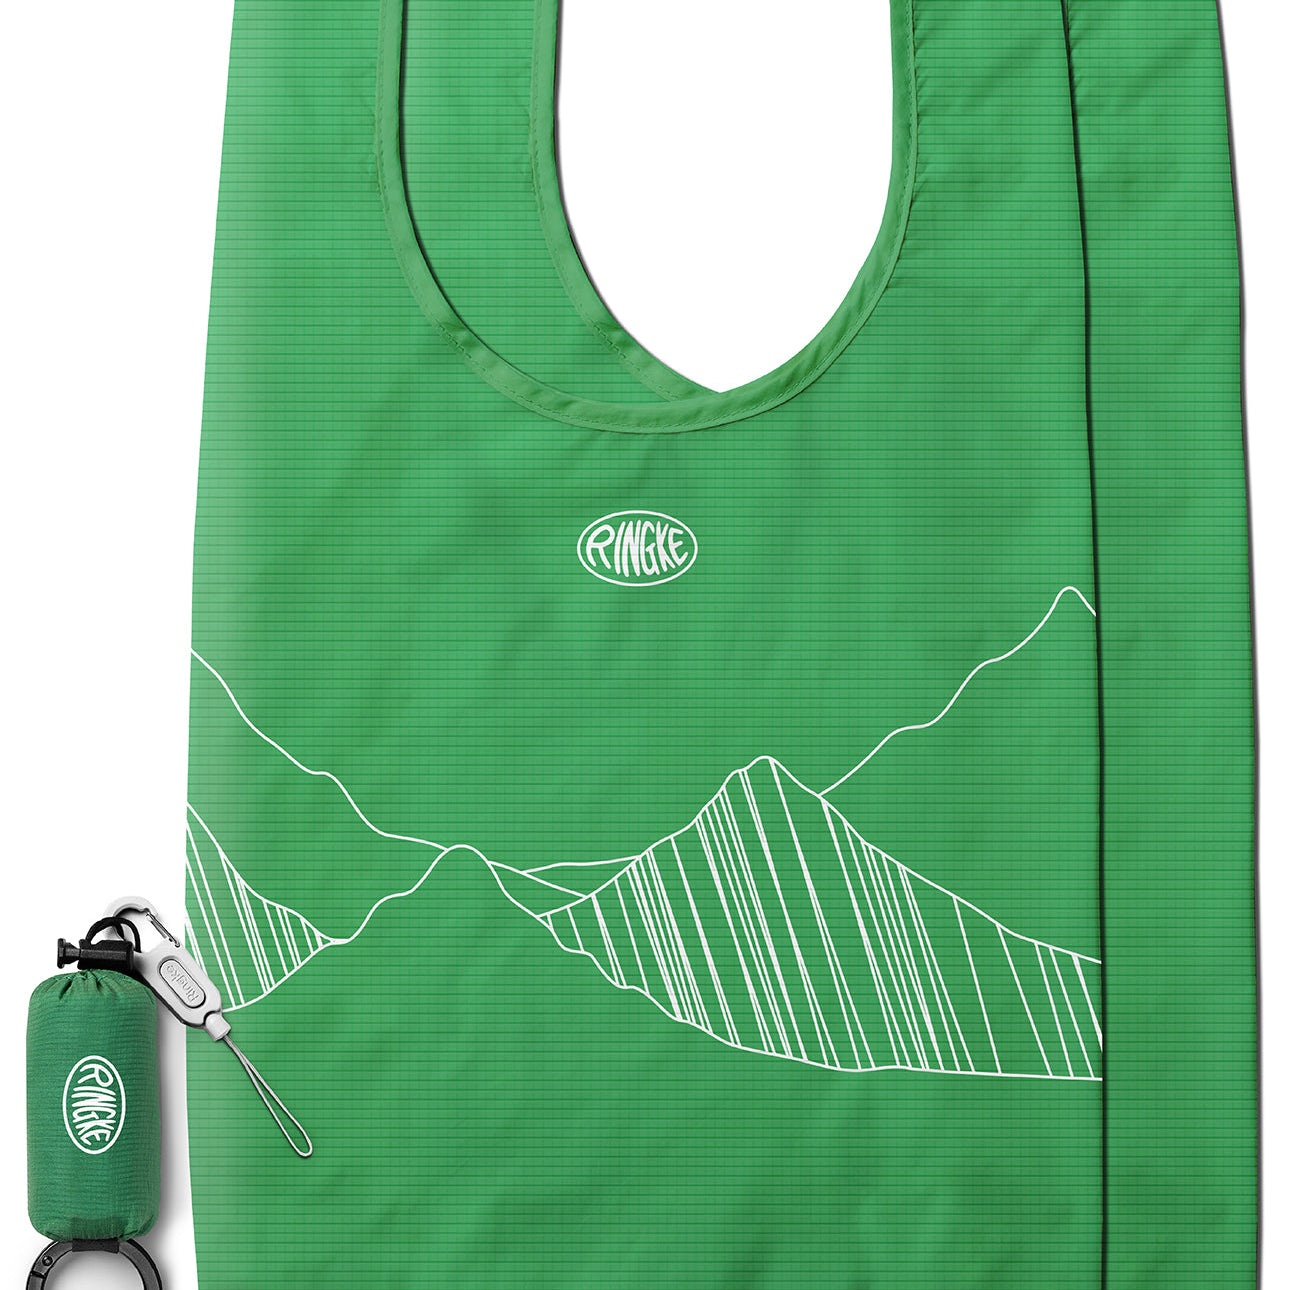 Day-Me Bag | Mountain - The world's lightest bag